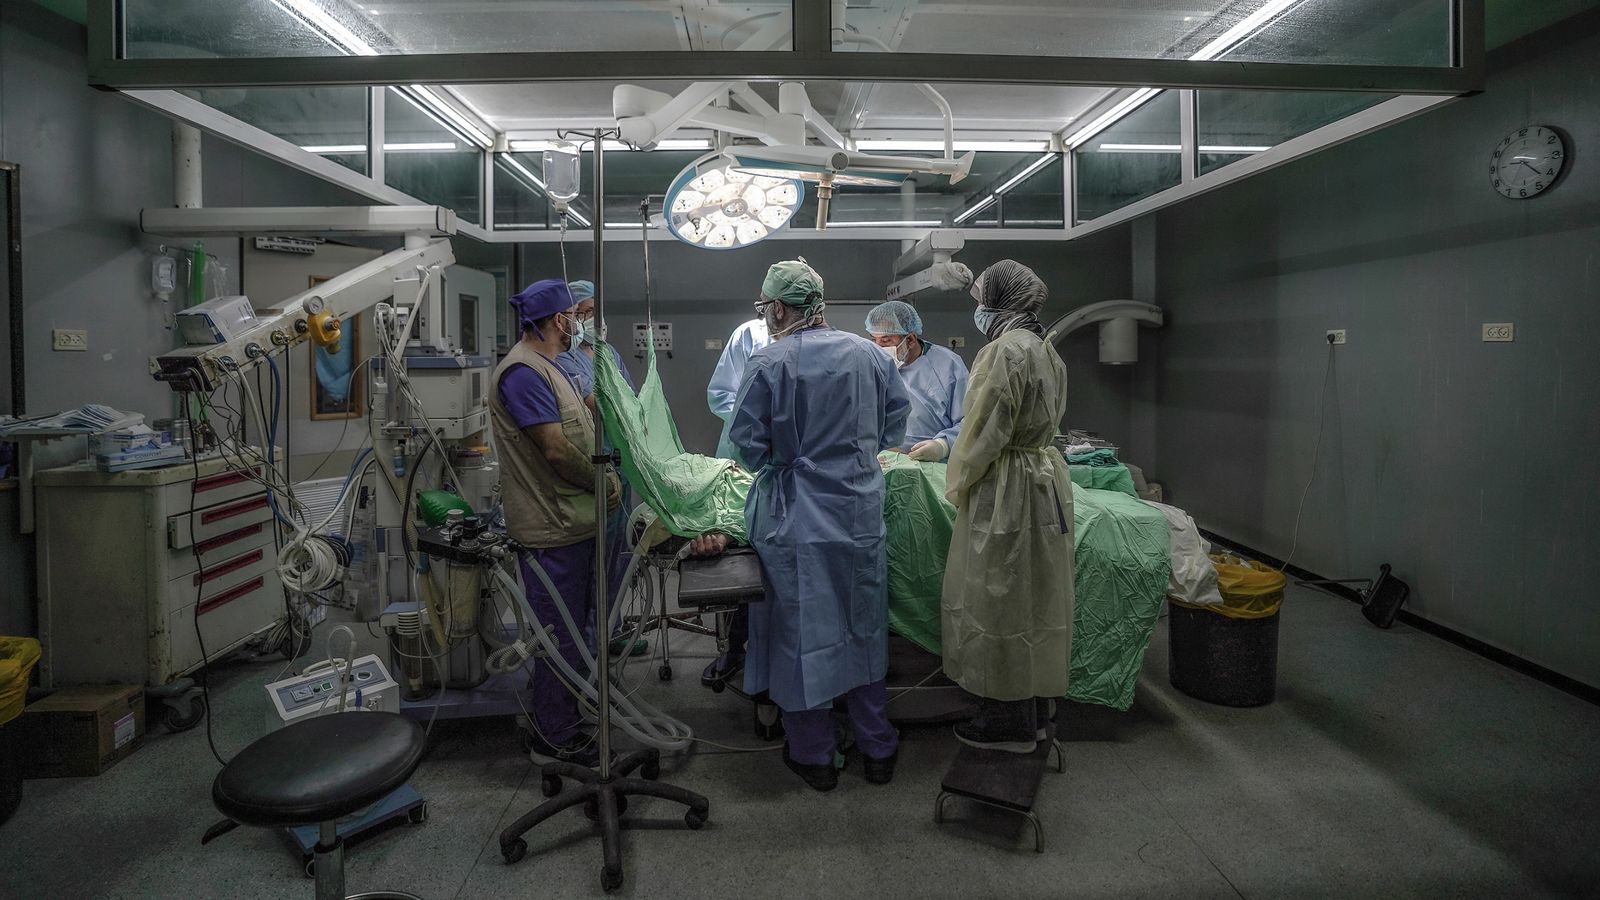 Israel-Hamas war: Doctors facing 'unimaginable' situations in Gaza hospital, say aid groups